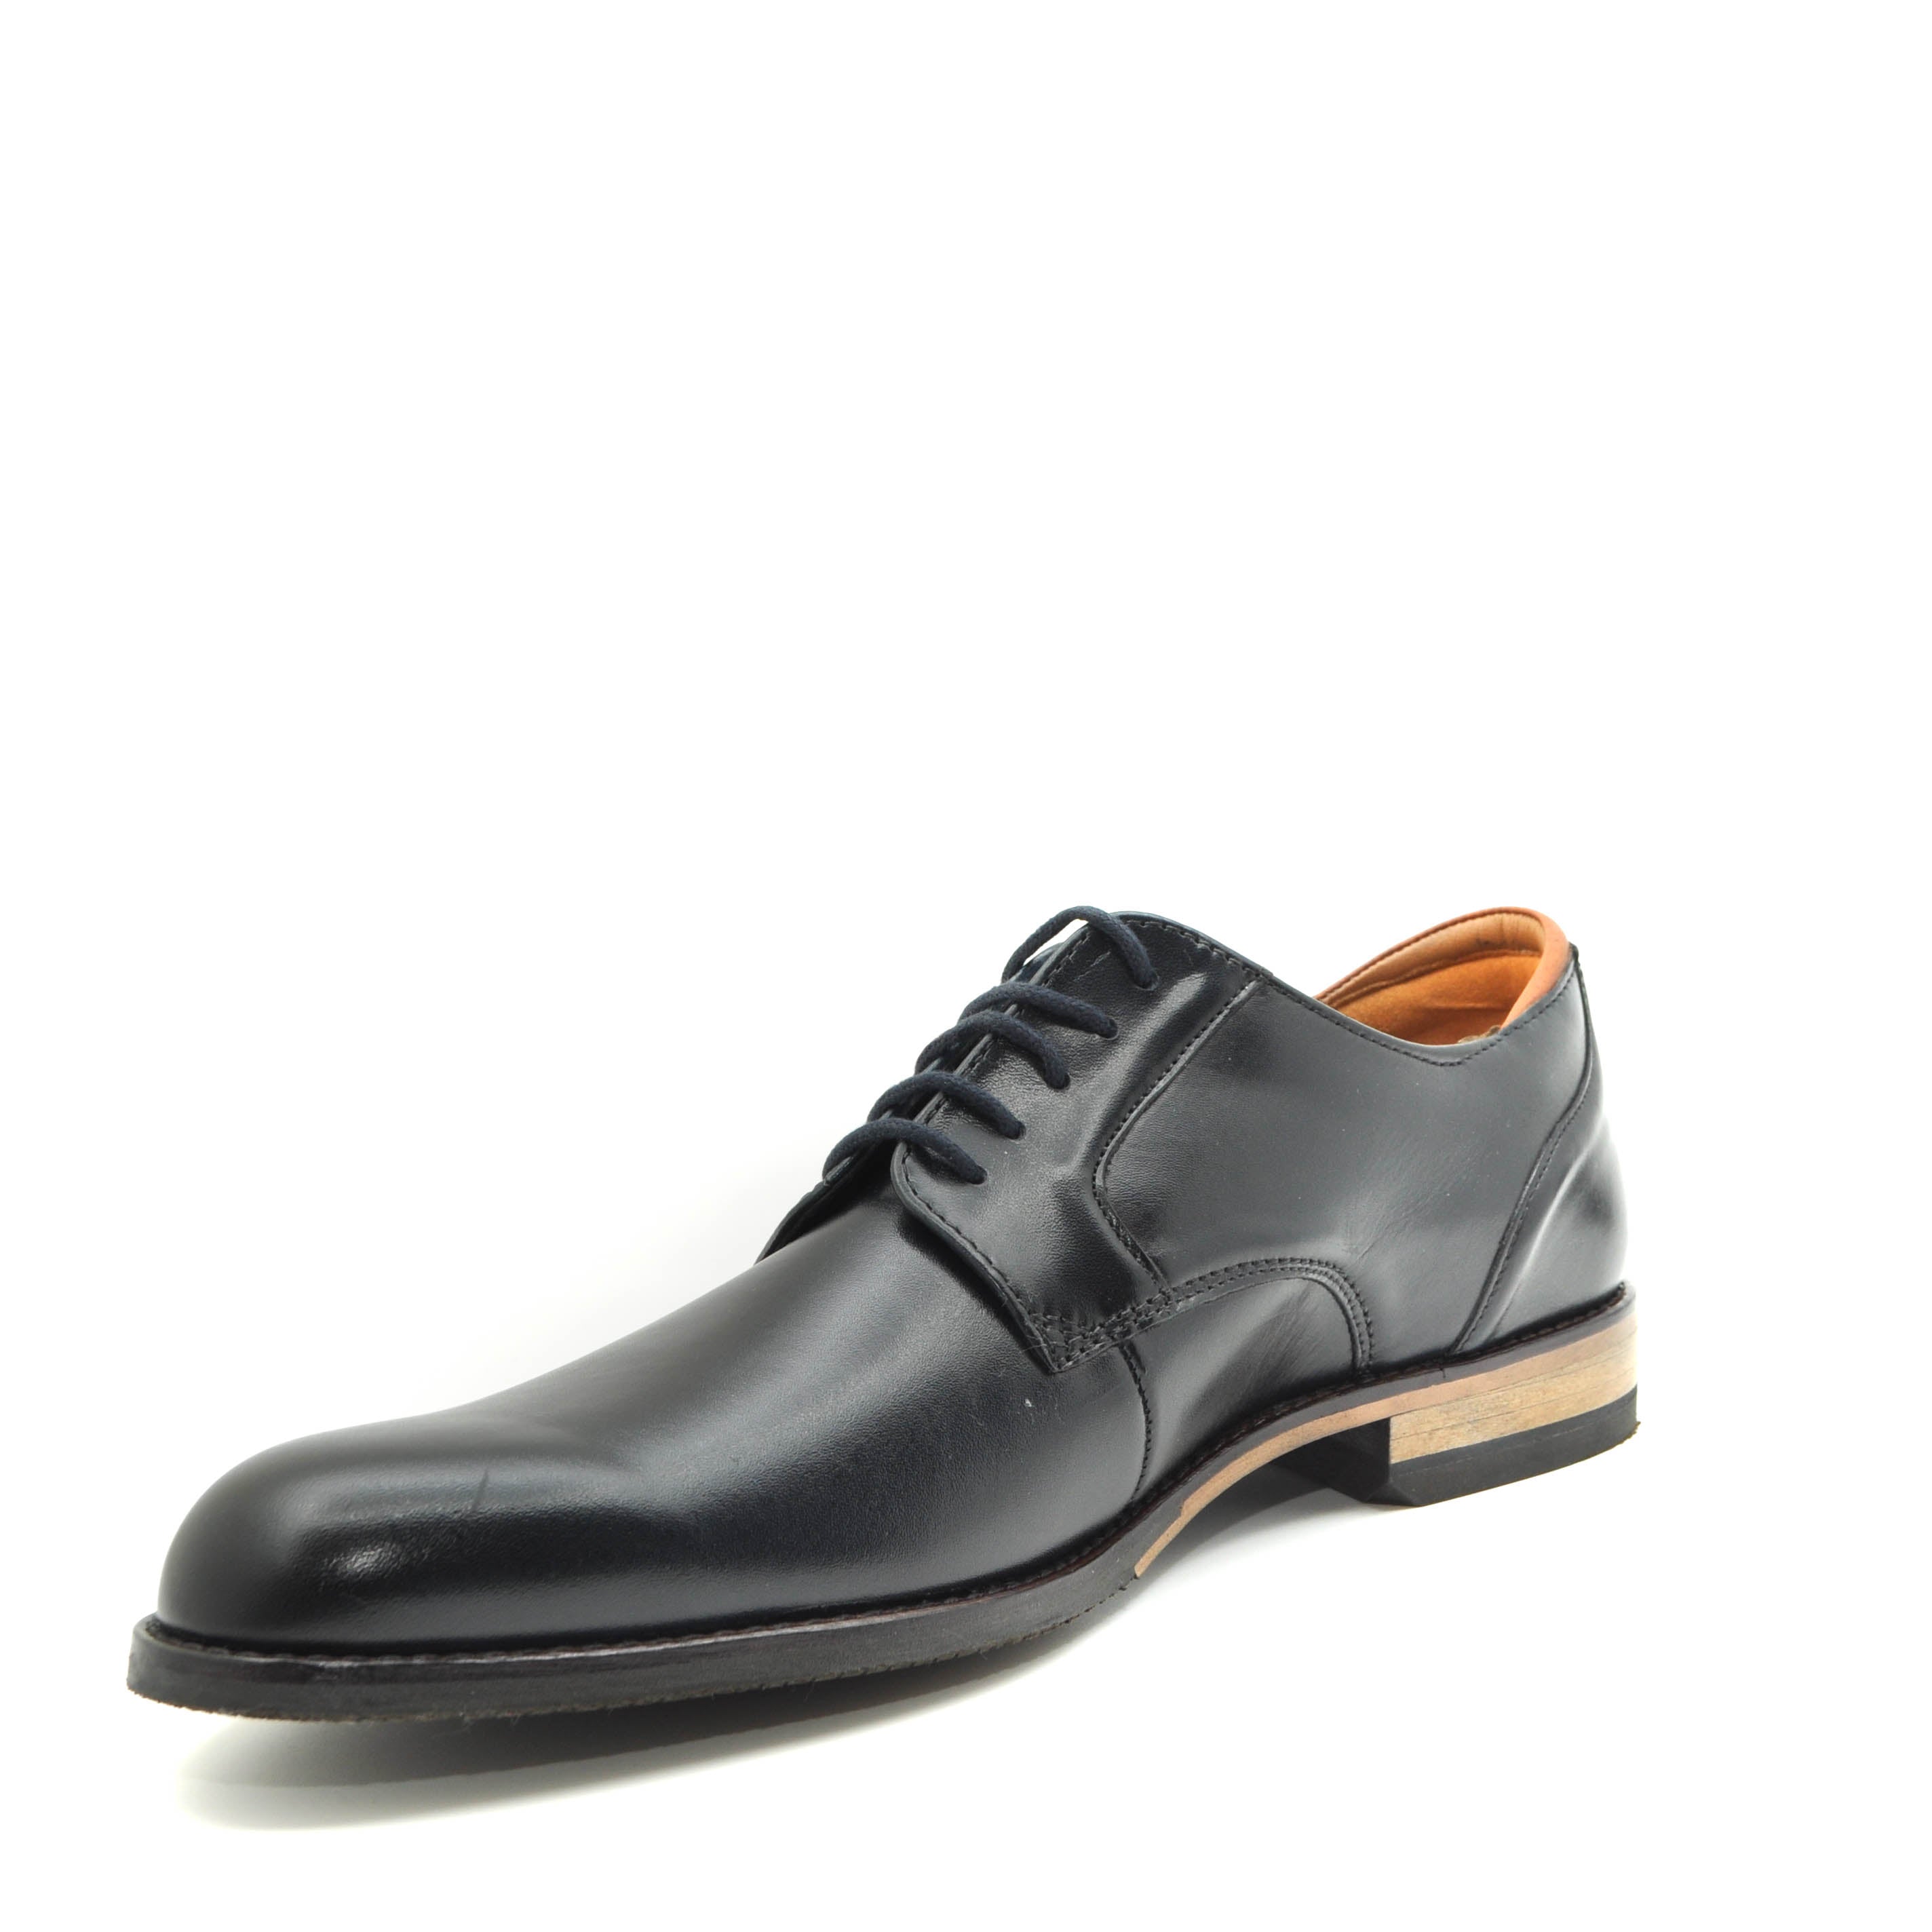 siv ubehag spor Clarks shoes online ireland | navy leather dress shoes | suit shoes